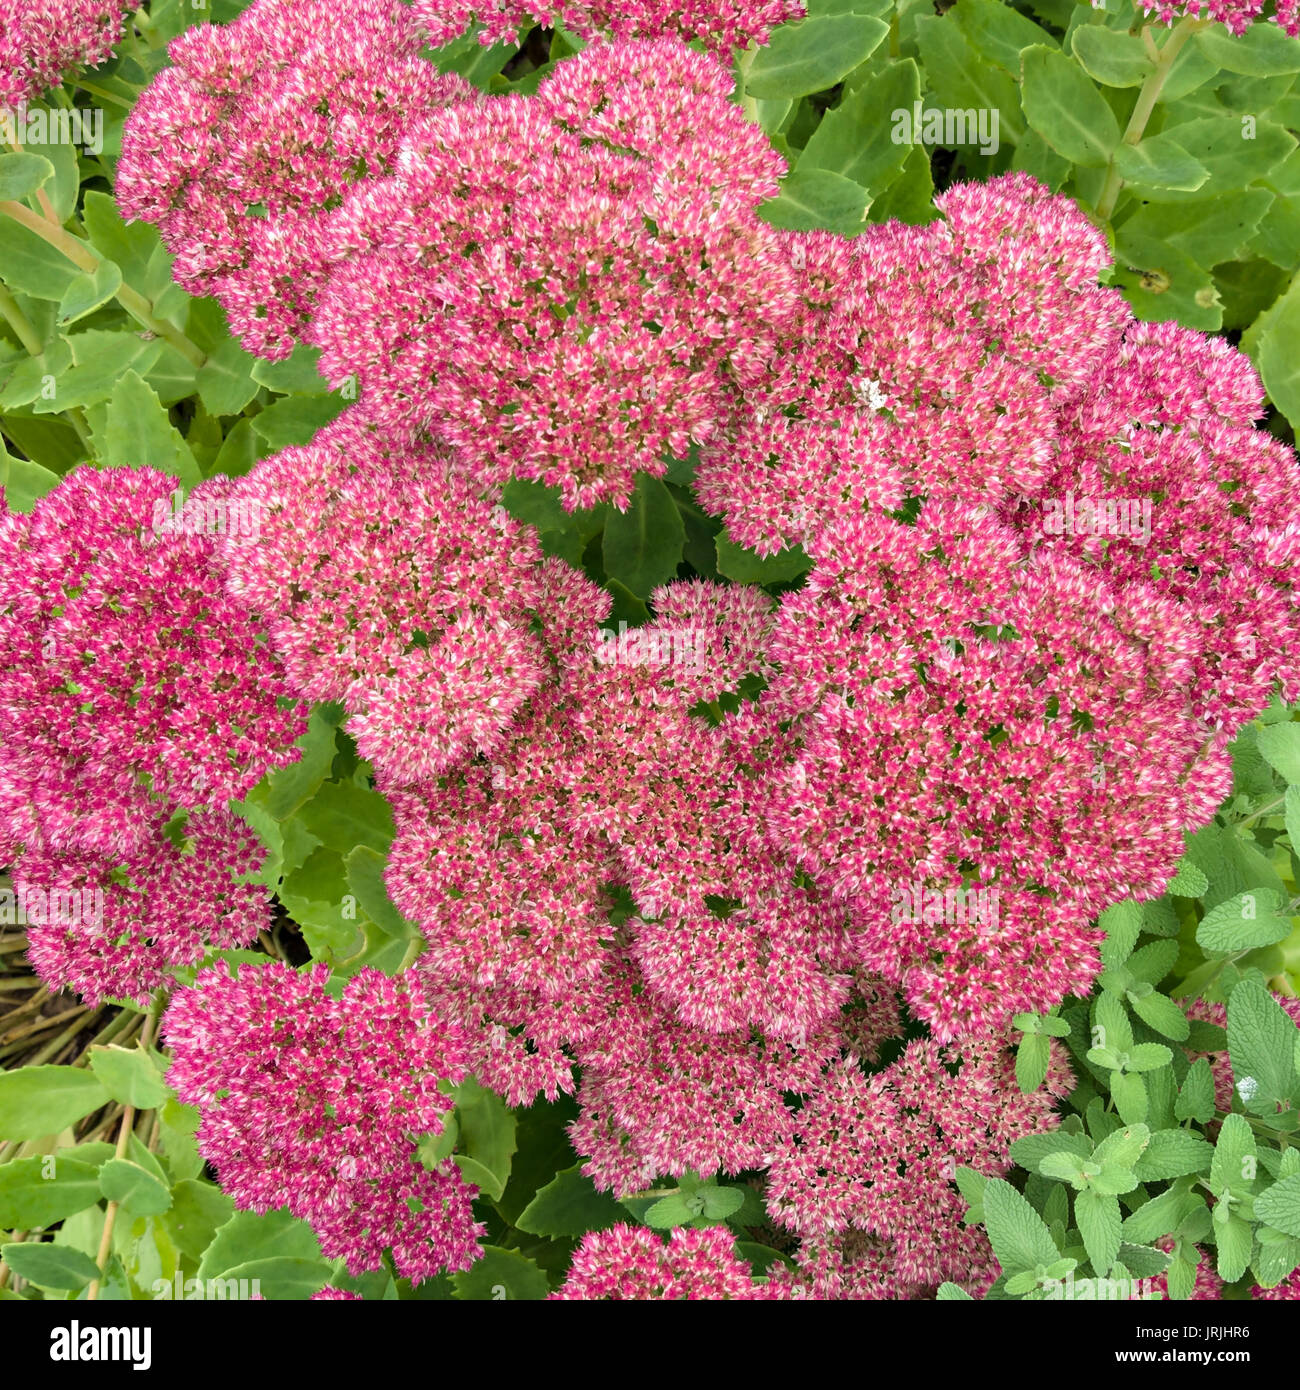 Pink Autumn Joy Sedum flowers Stock Photo